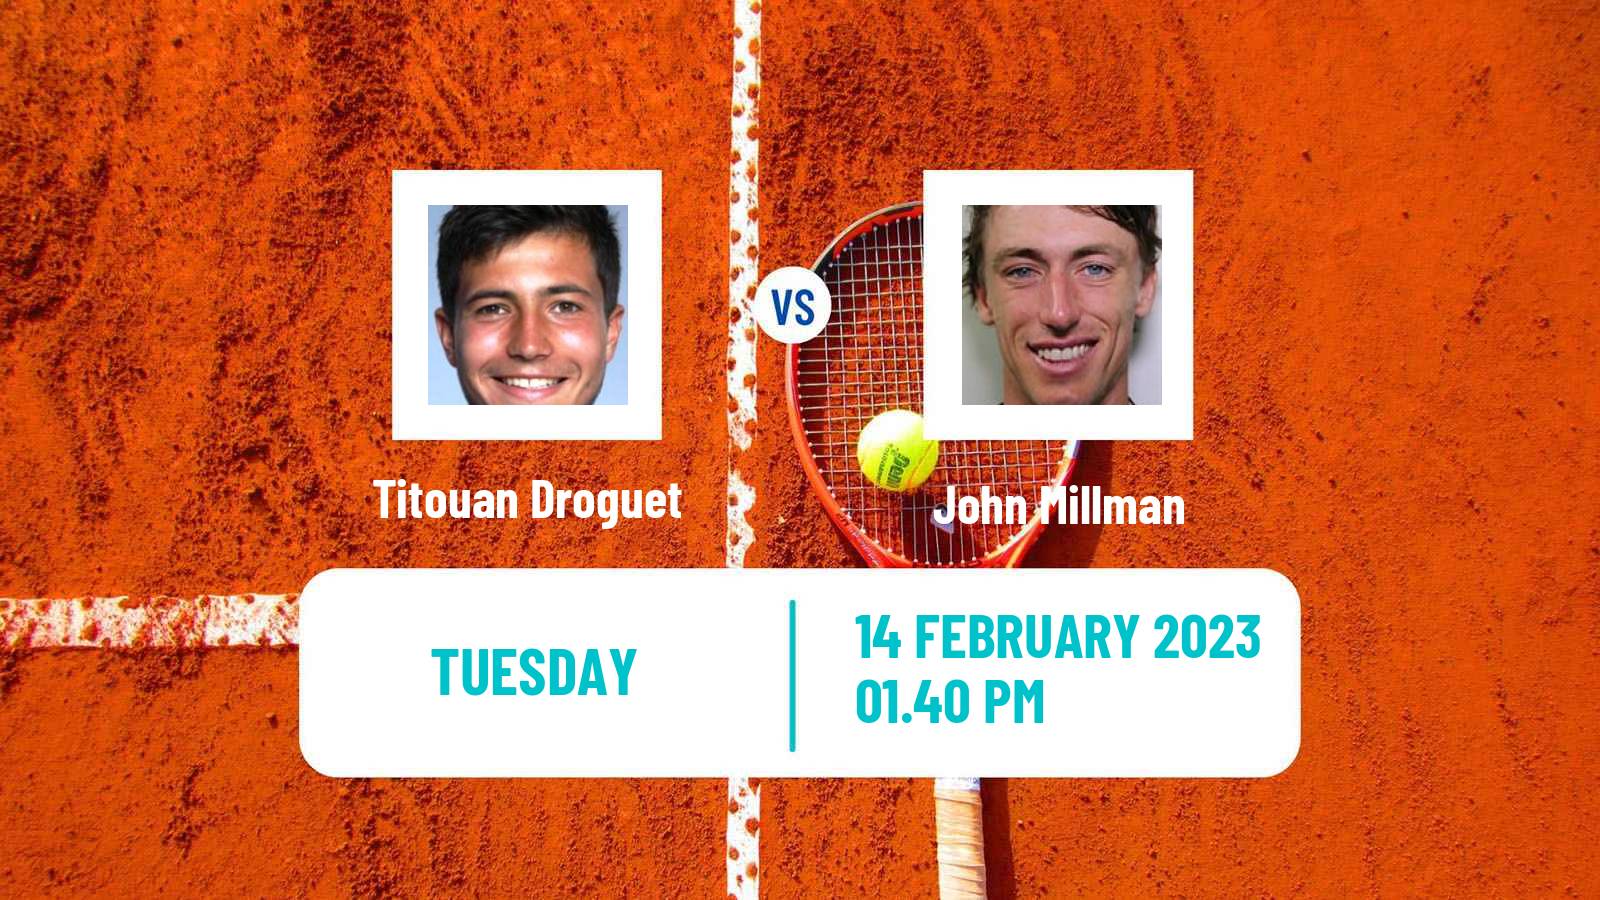 Tennis ATP Challenger Titouan Droguet - John Millman